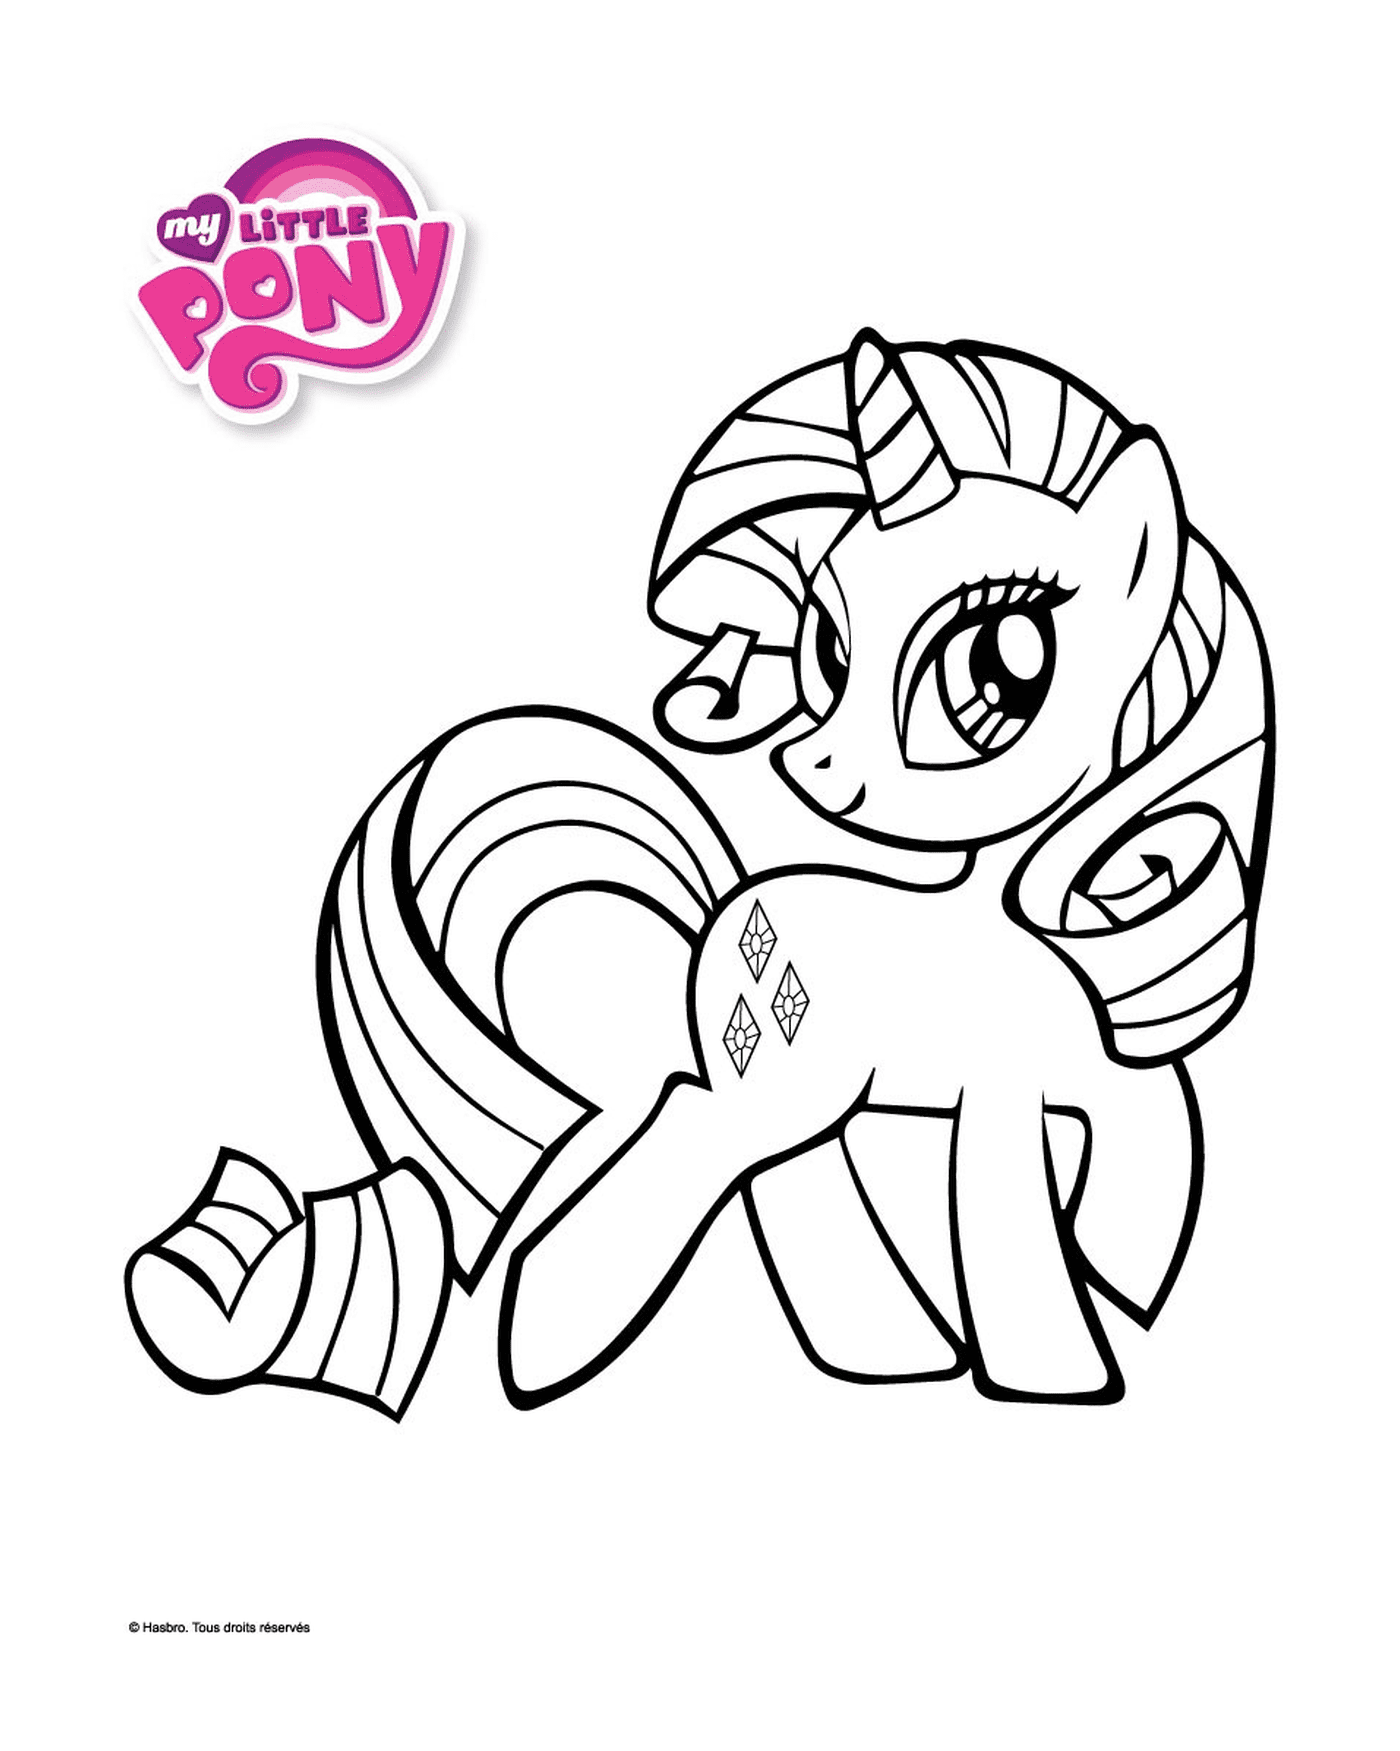  Rarity, an elegant pony with a ribbon 